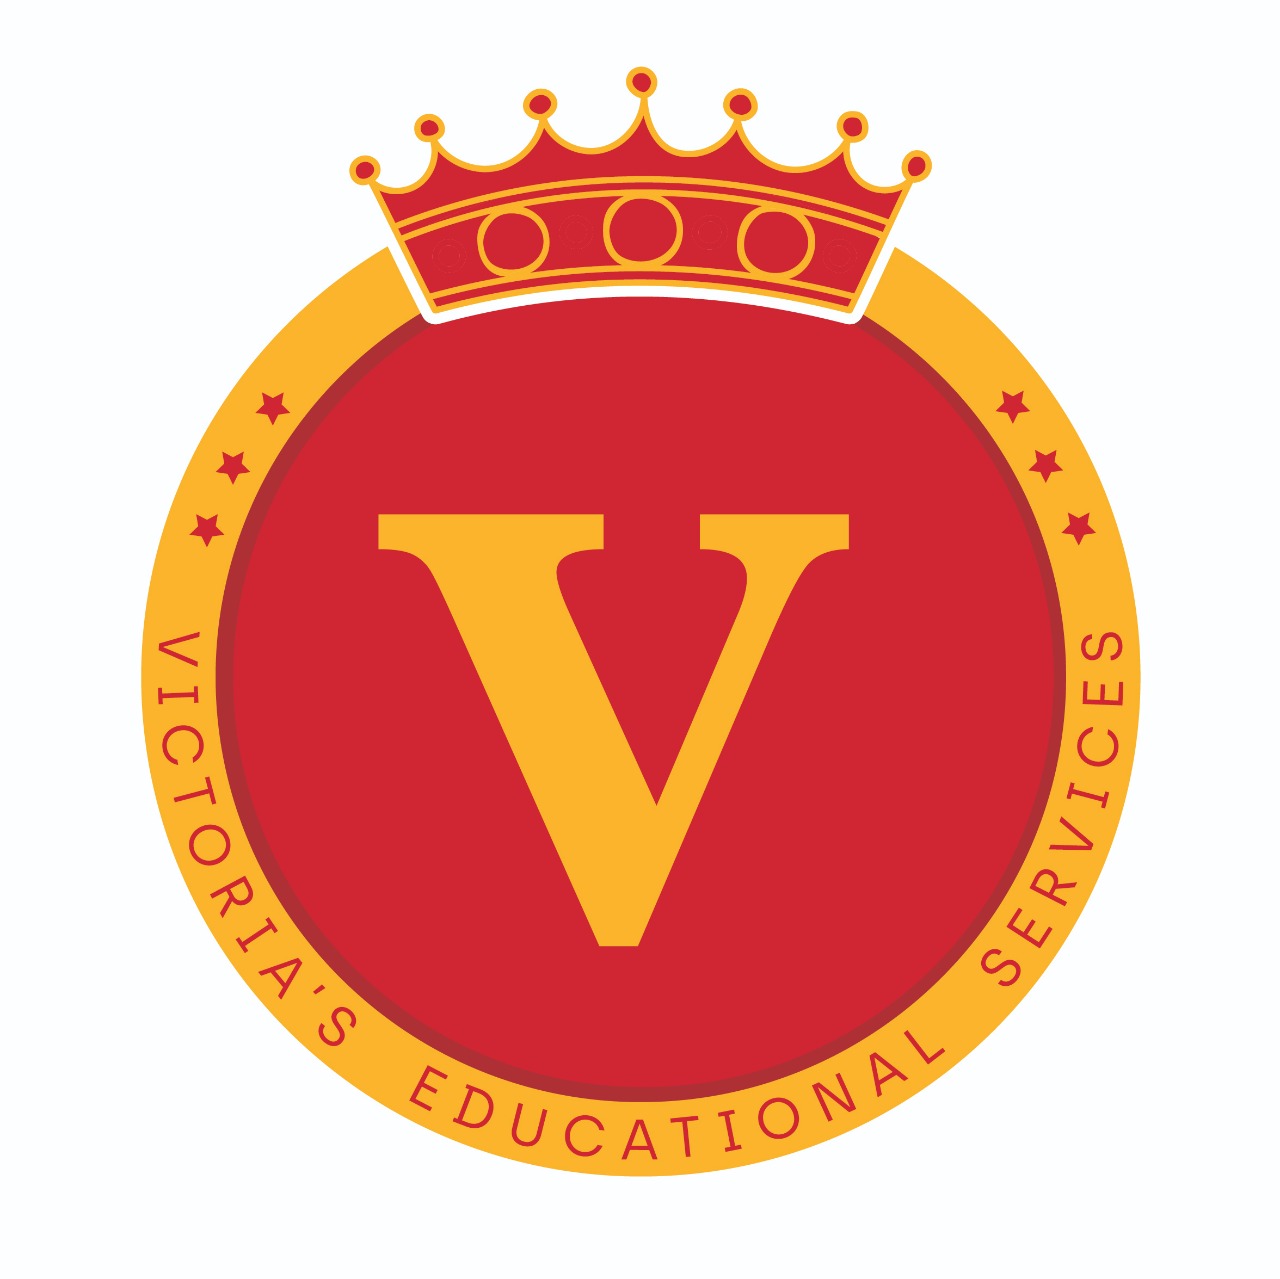 Victoria educational Services Kerala